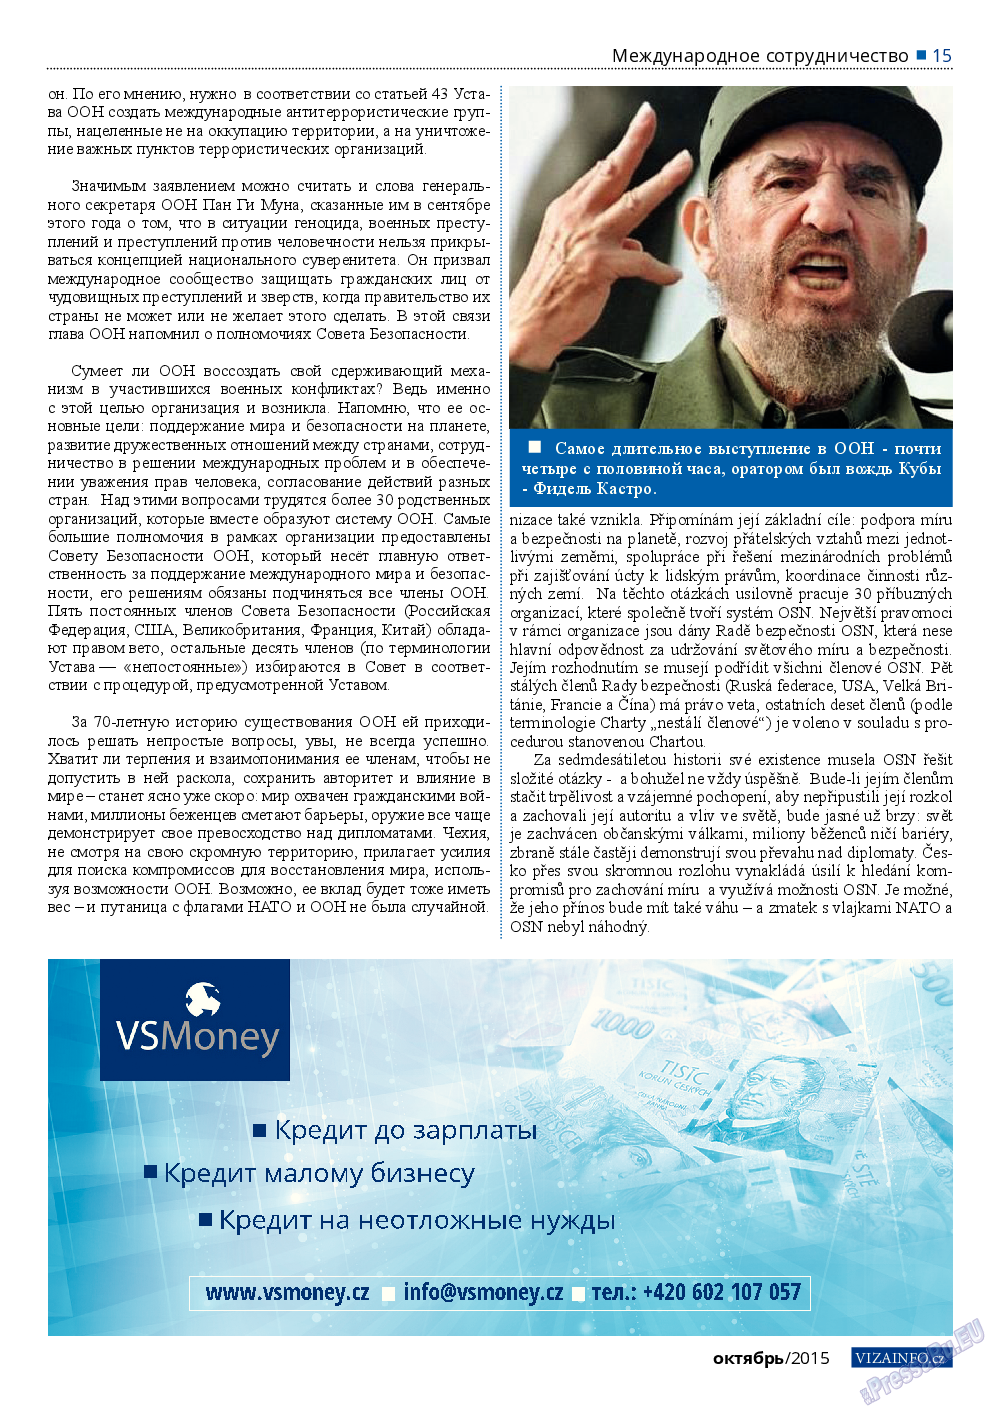 Vizainfo.cz, газета. 2015 №73 стр.15